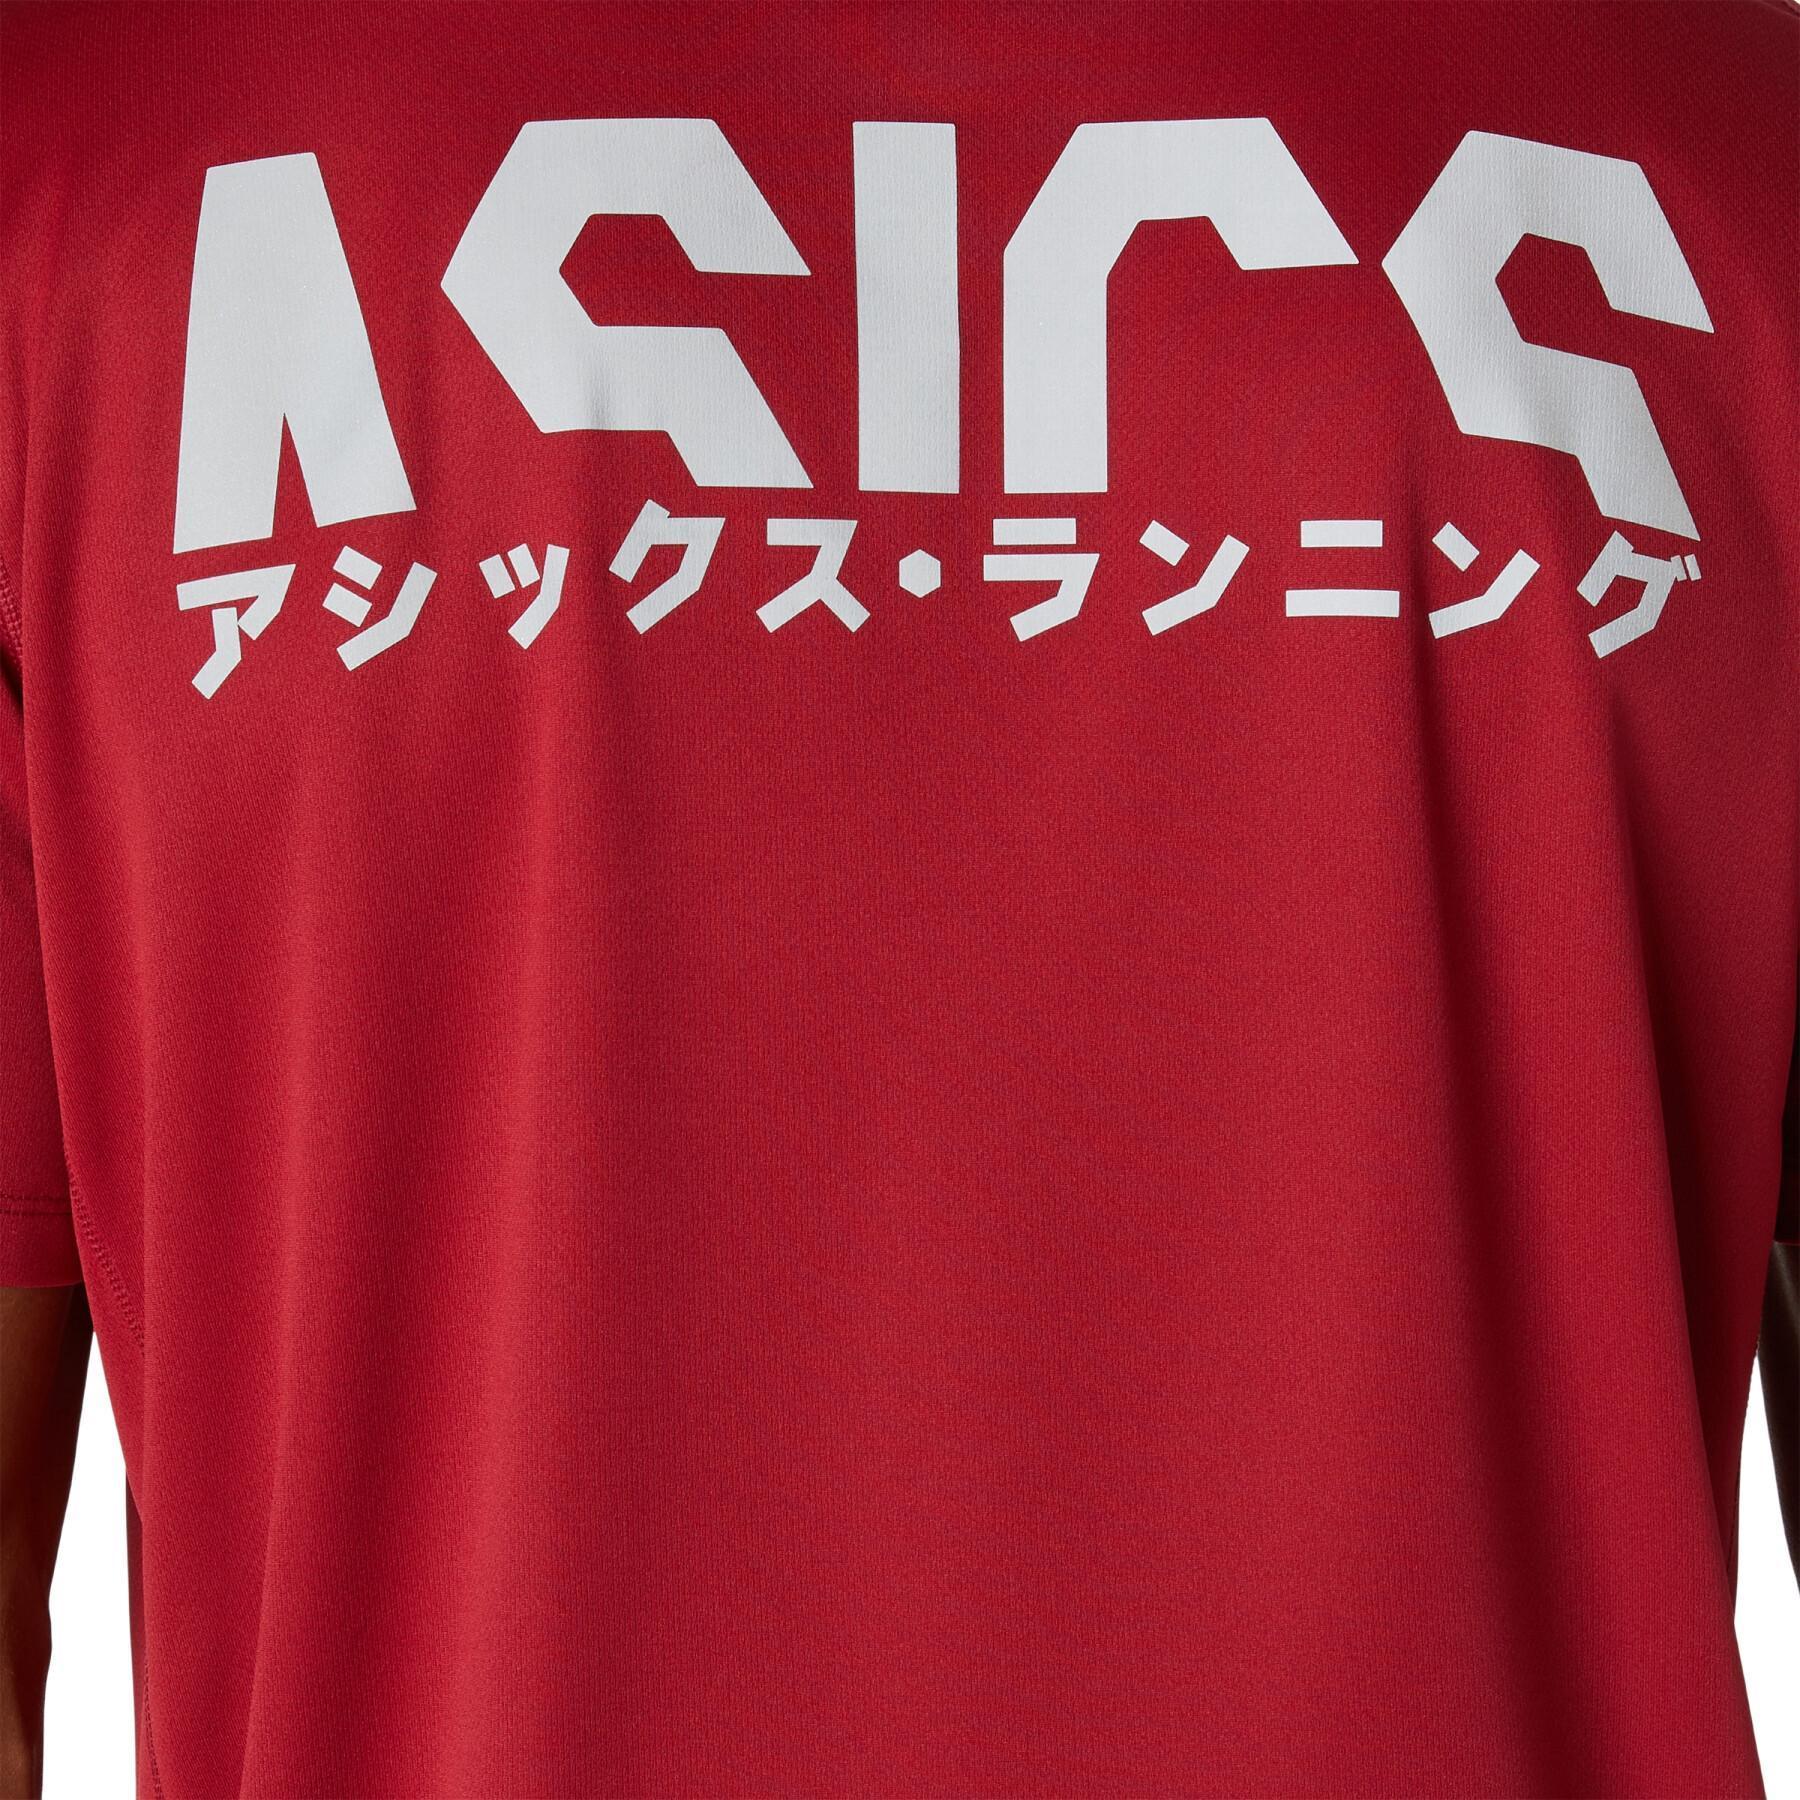 Camiseta Asics Katakana